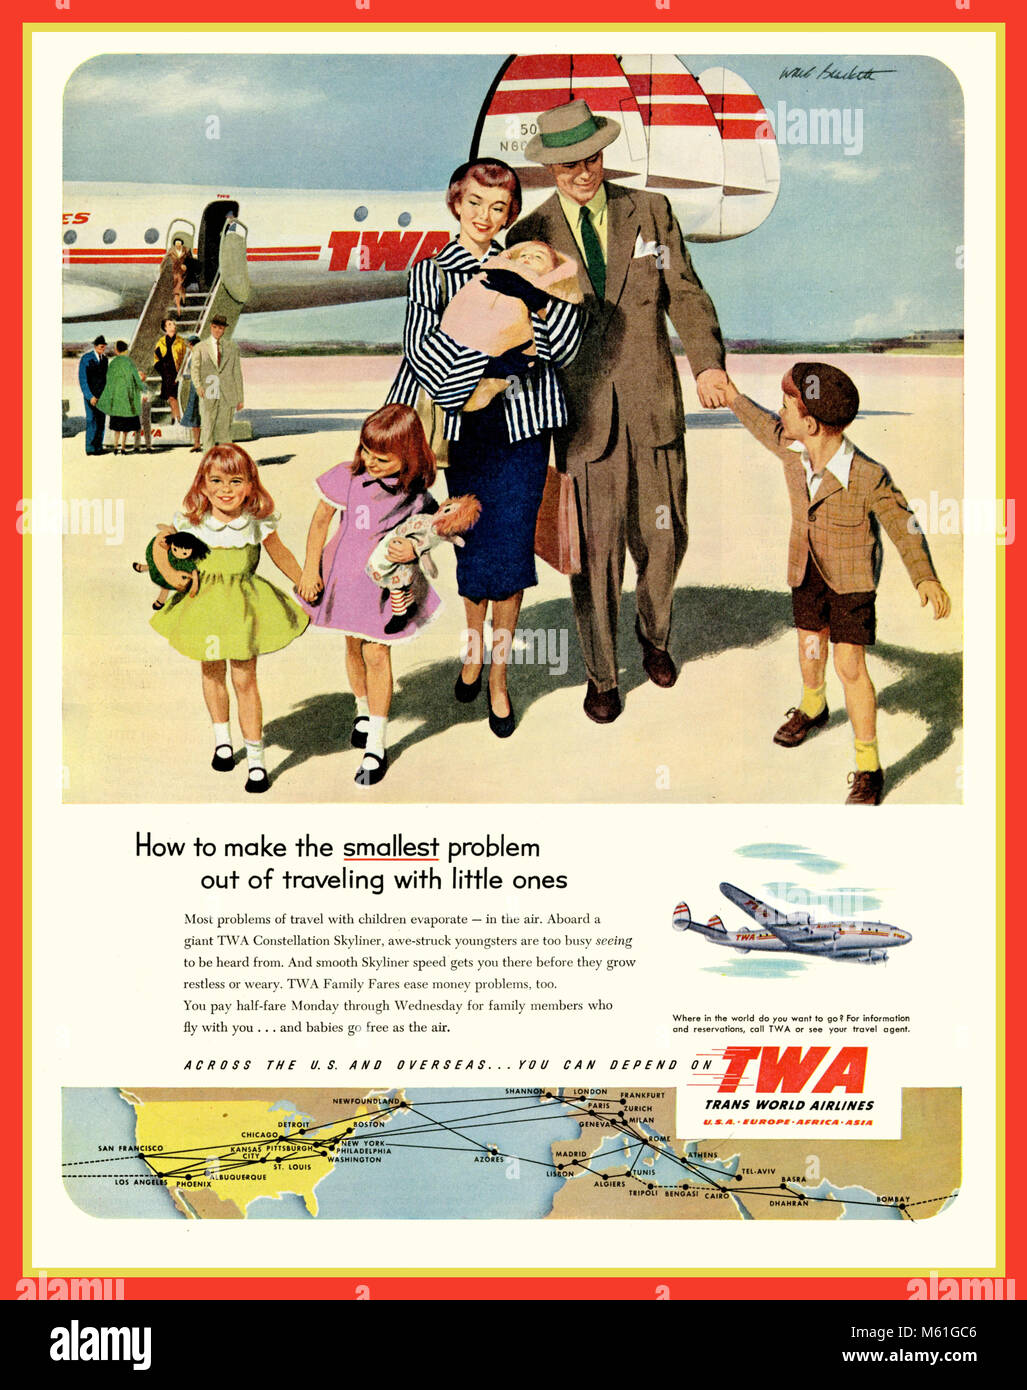 https://c8.alamy.com/comp/M61GC6/twa-1950s-vintage-airlines-press-advertisement-for-twa-illustrating-M61GC6.jpg